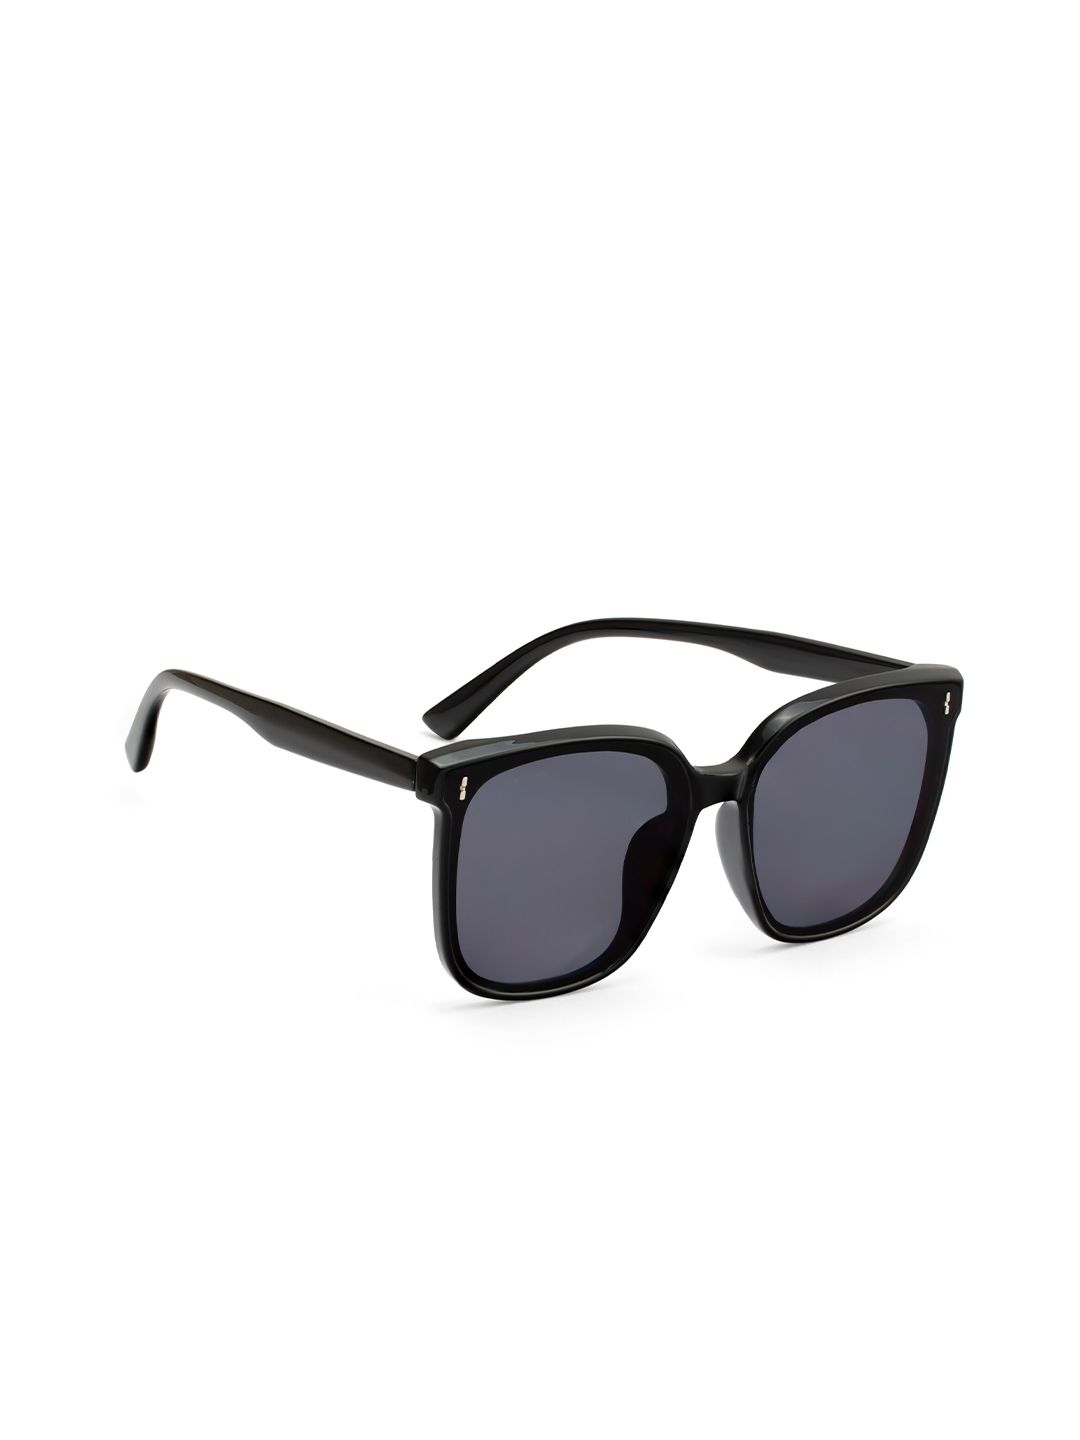 ROYAL SON Unisex Black Lens & Black Wayfarer Sunglasses CHI00111-C1 Price in India